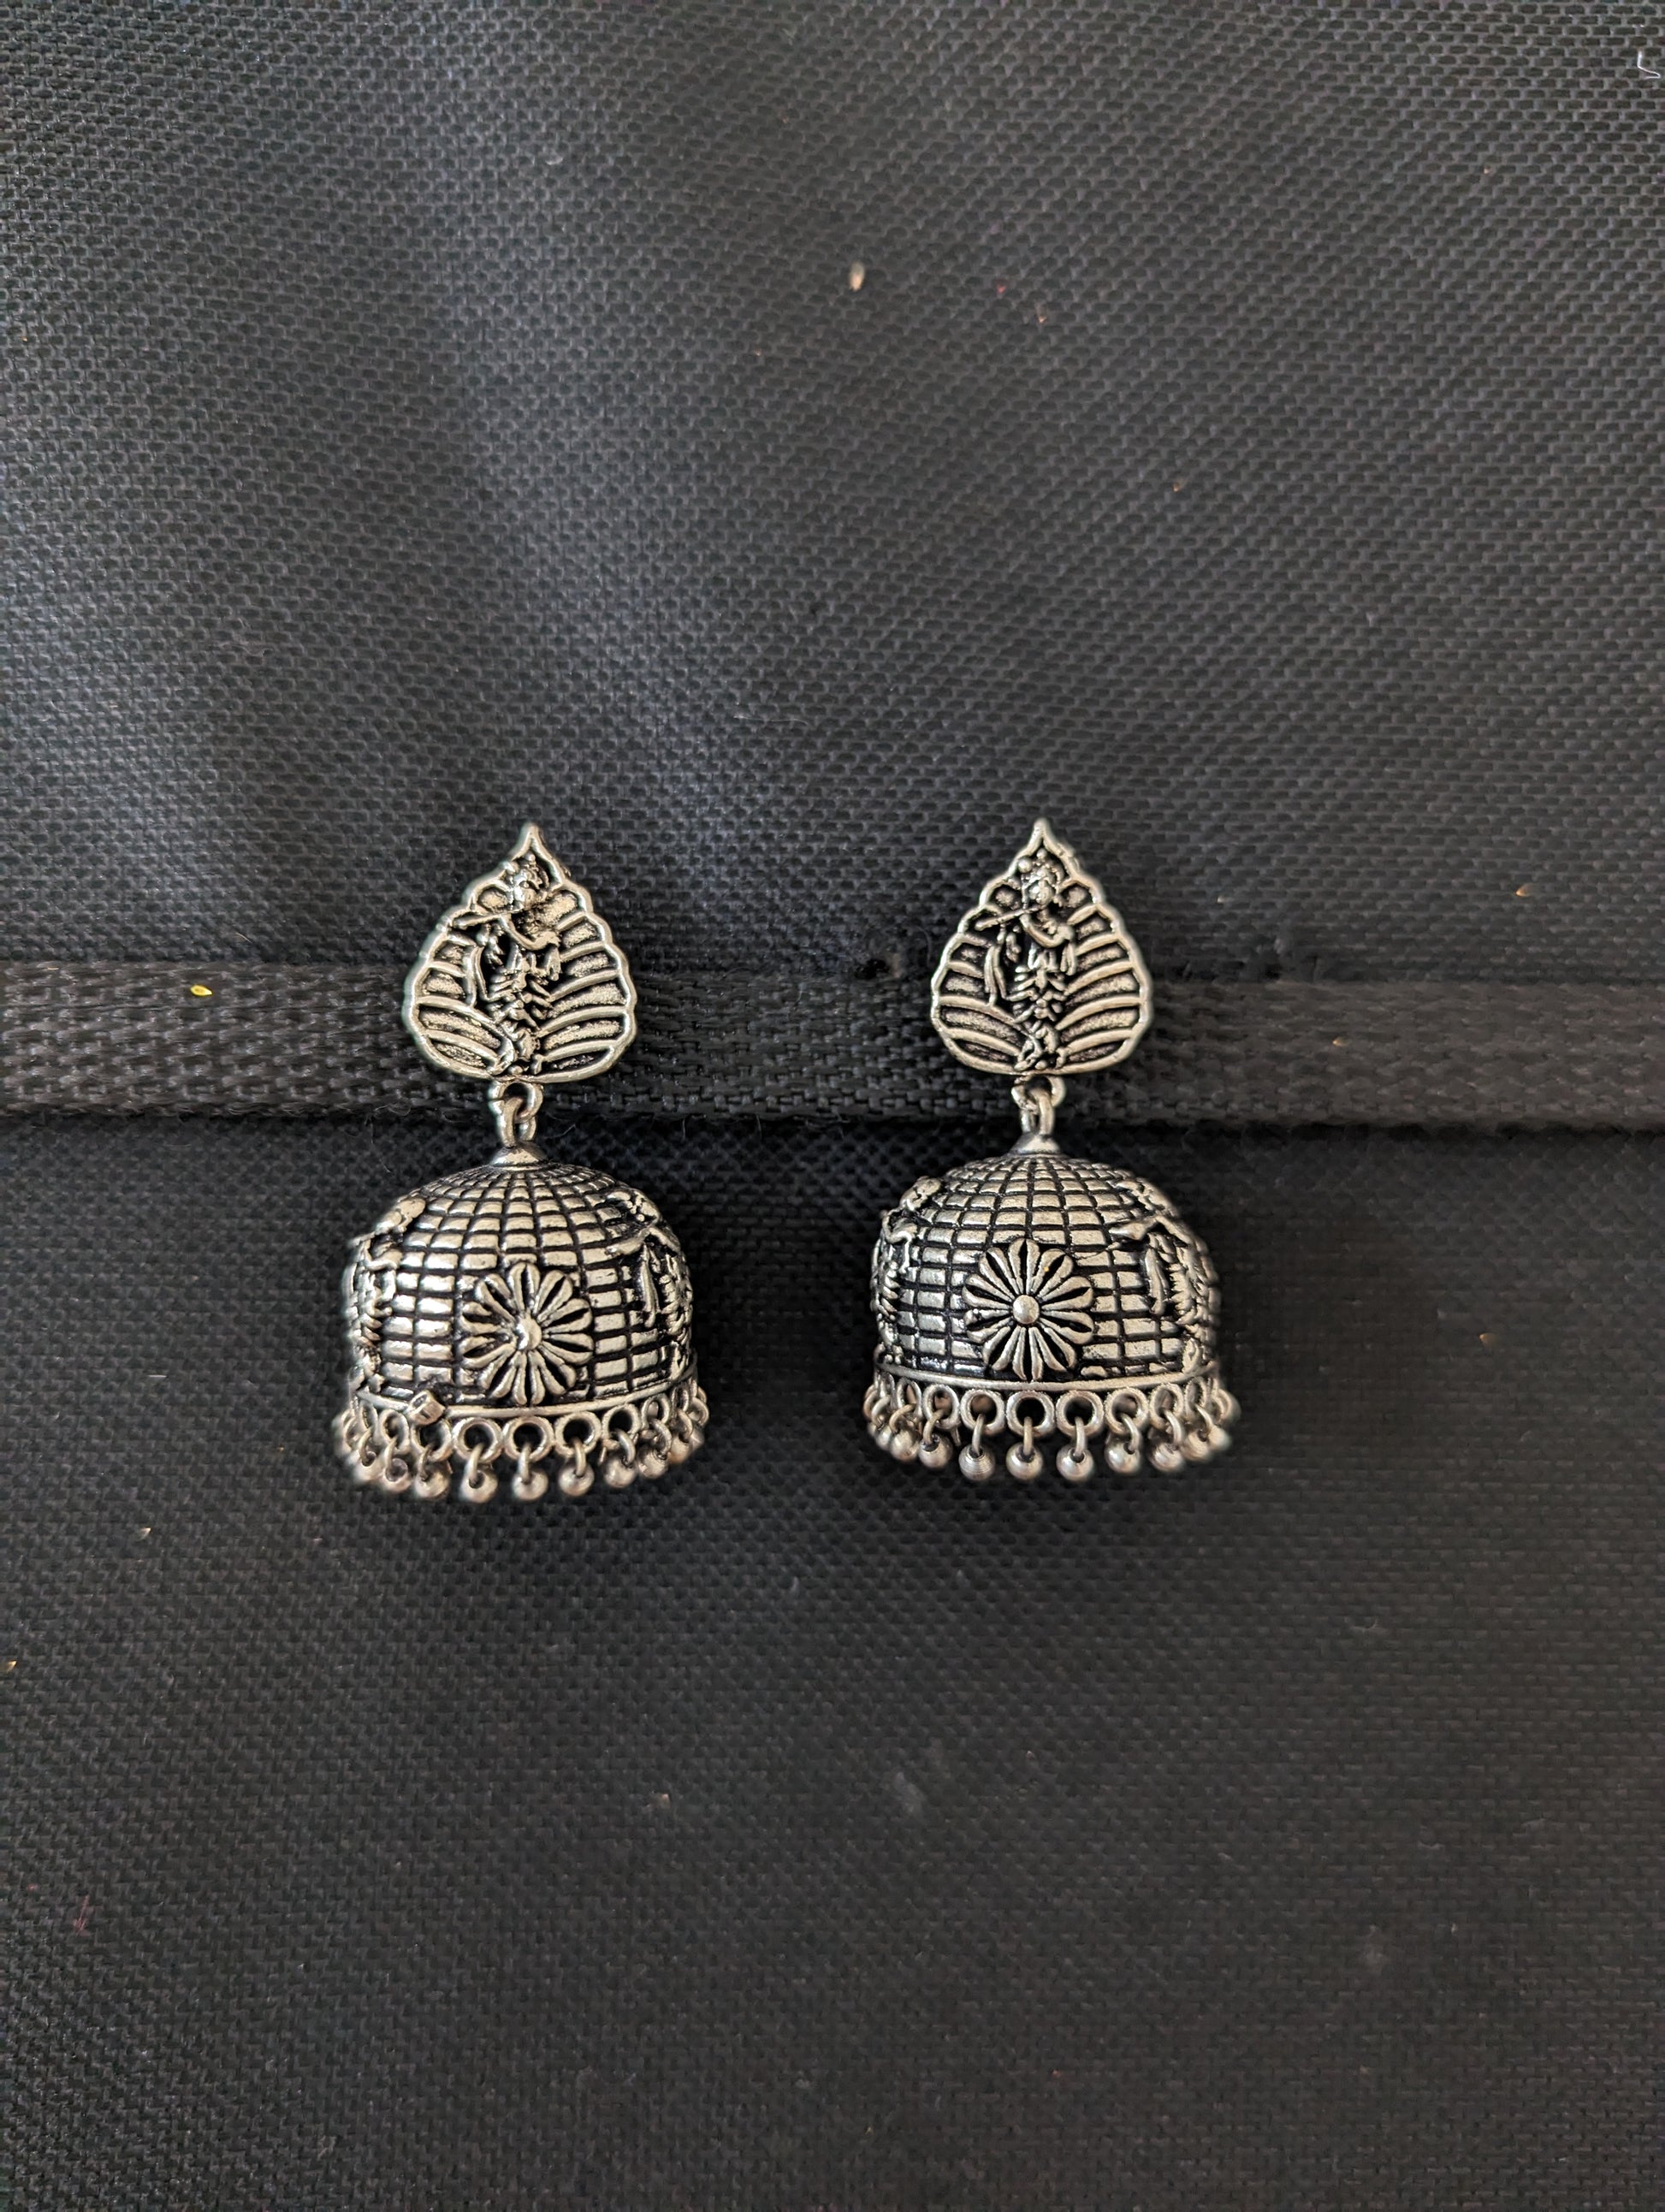 Oxidized silver God theme Jhumka Earrings - 5 designs - Simpliful